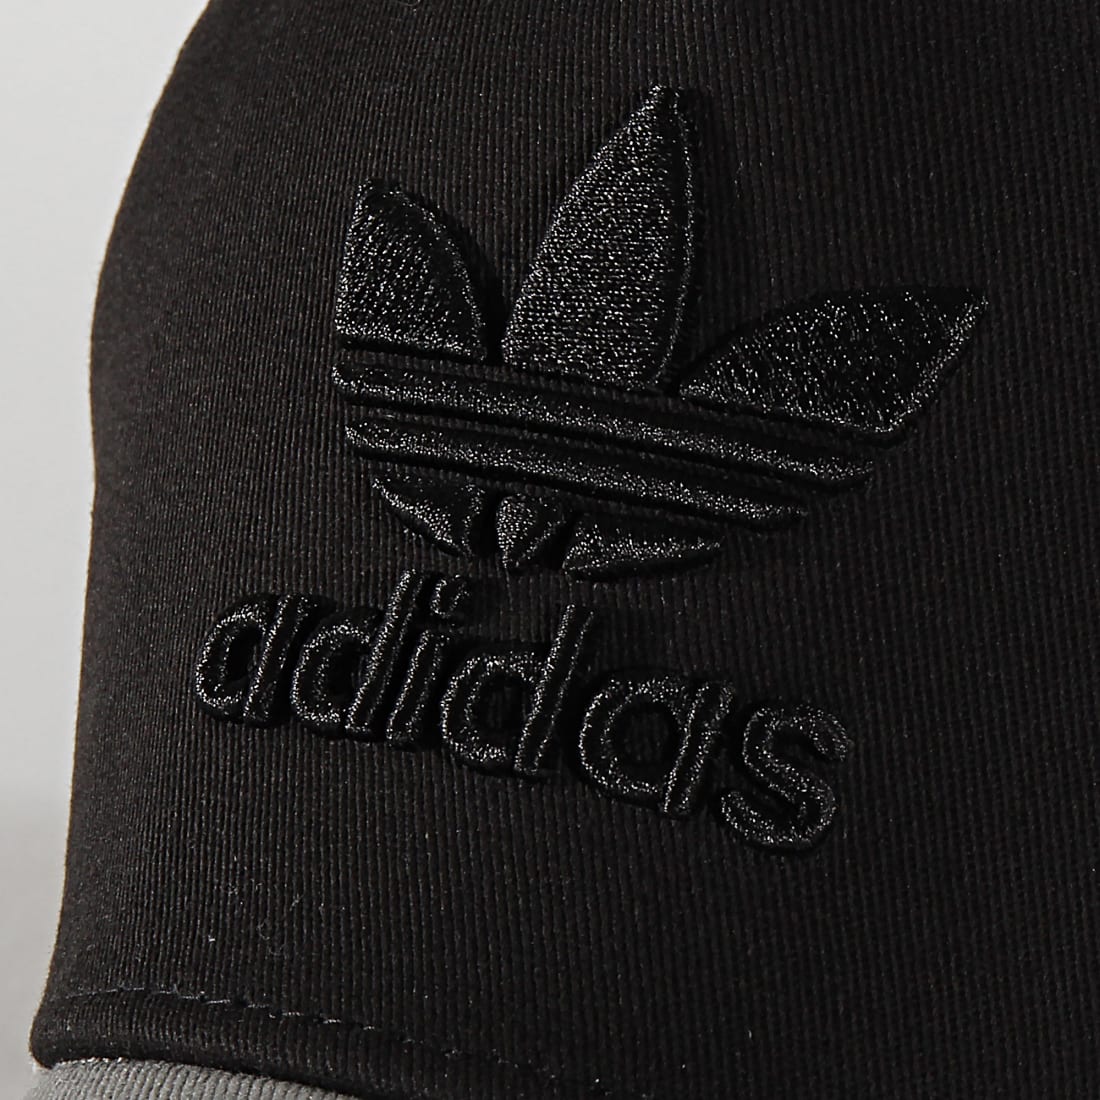 La casquette logo Trefoil noire, Adidas Originals